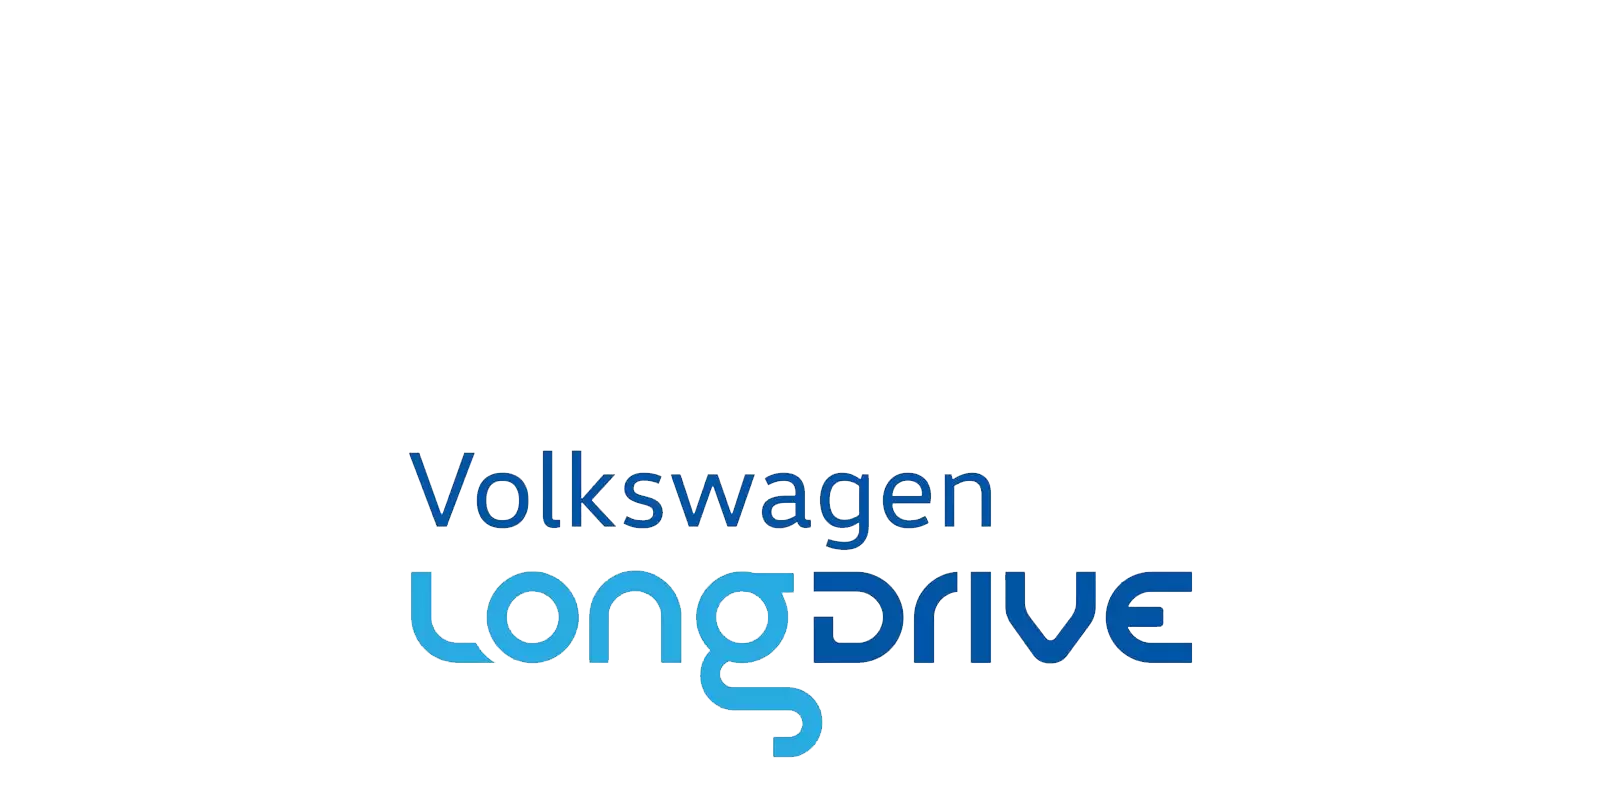 Logo Volkswagen Longdrive